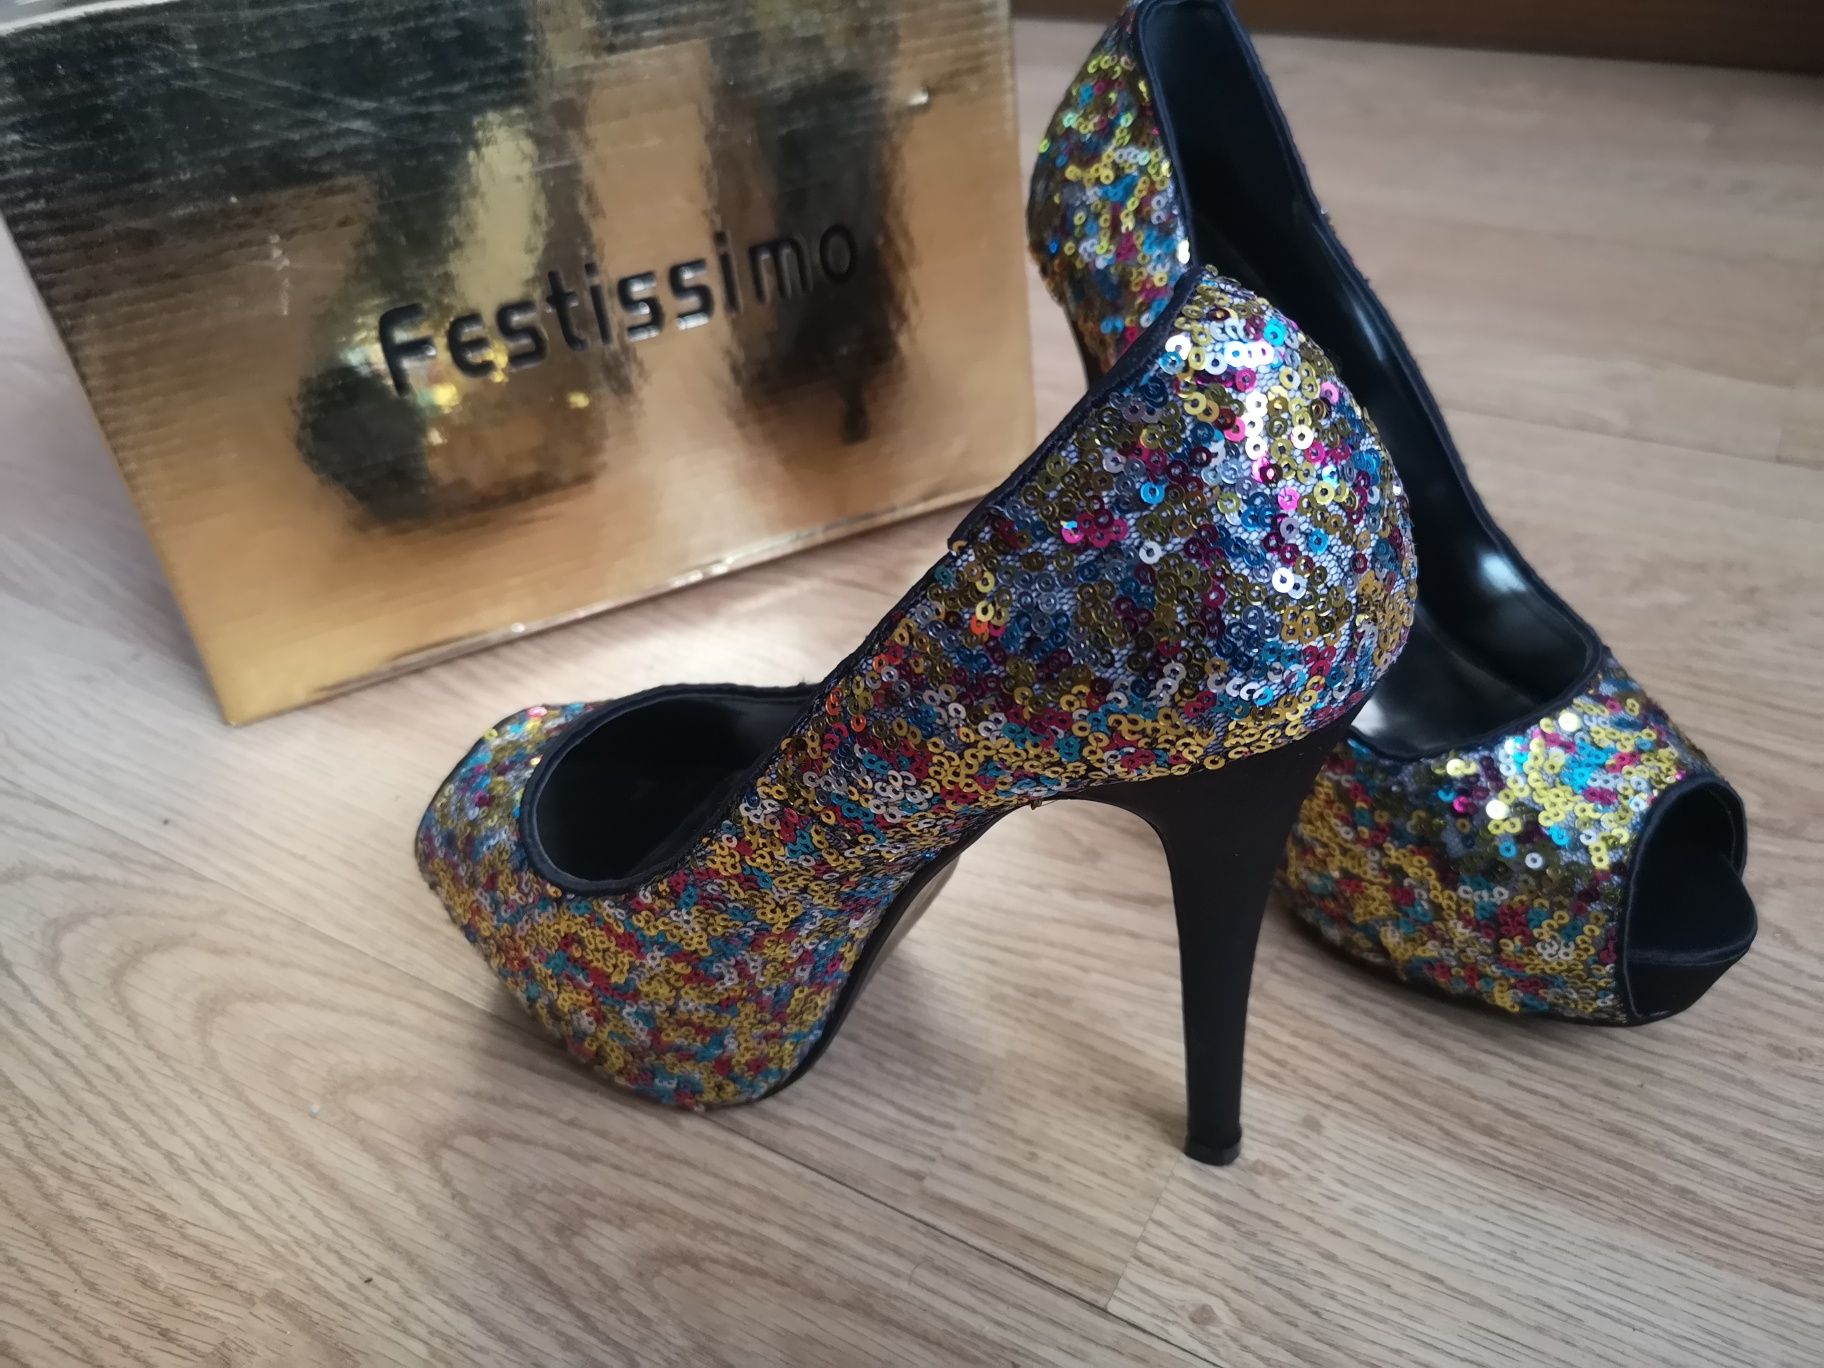 НОВИ Festissimo луксозни обувки със златни пайети висок ток, Размер 39